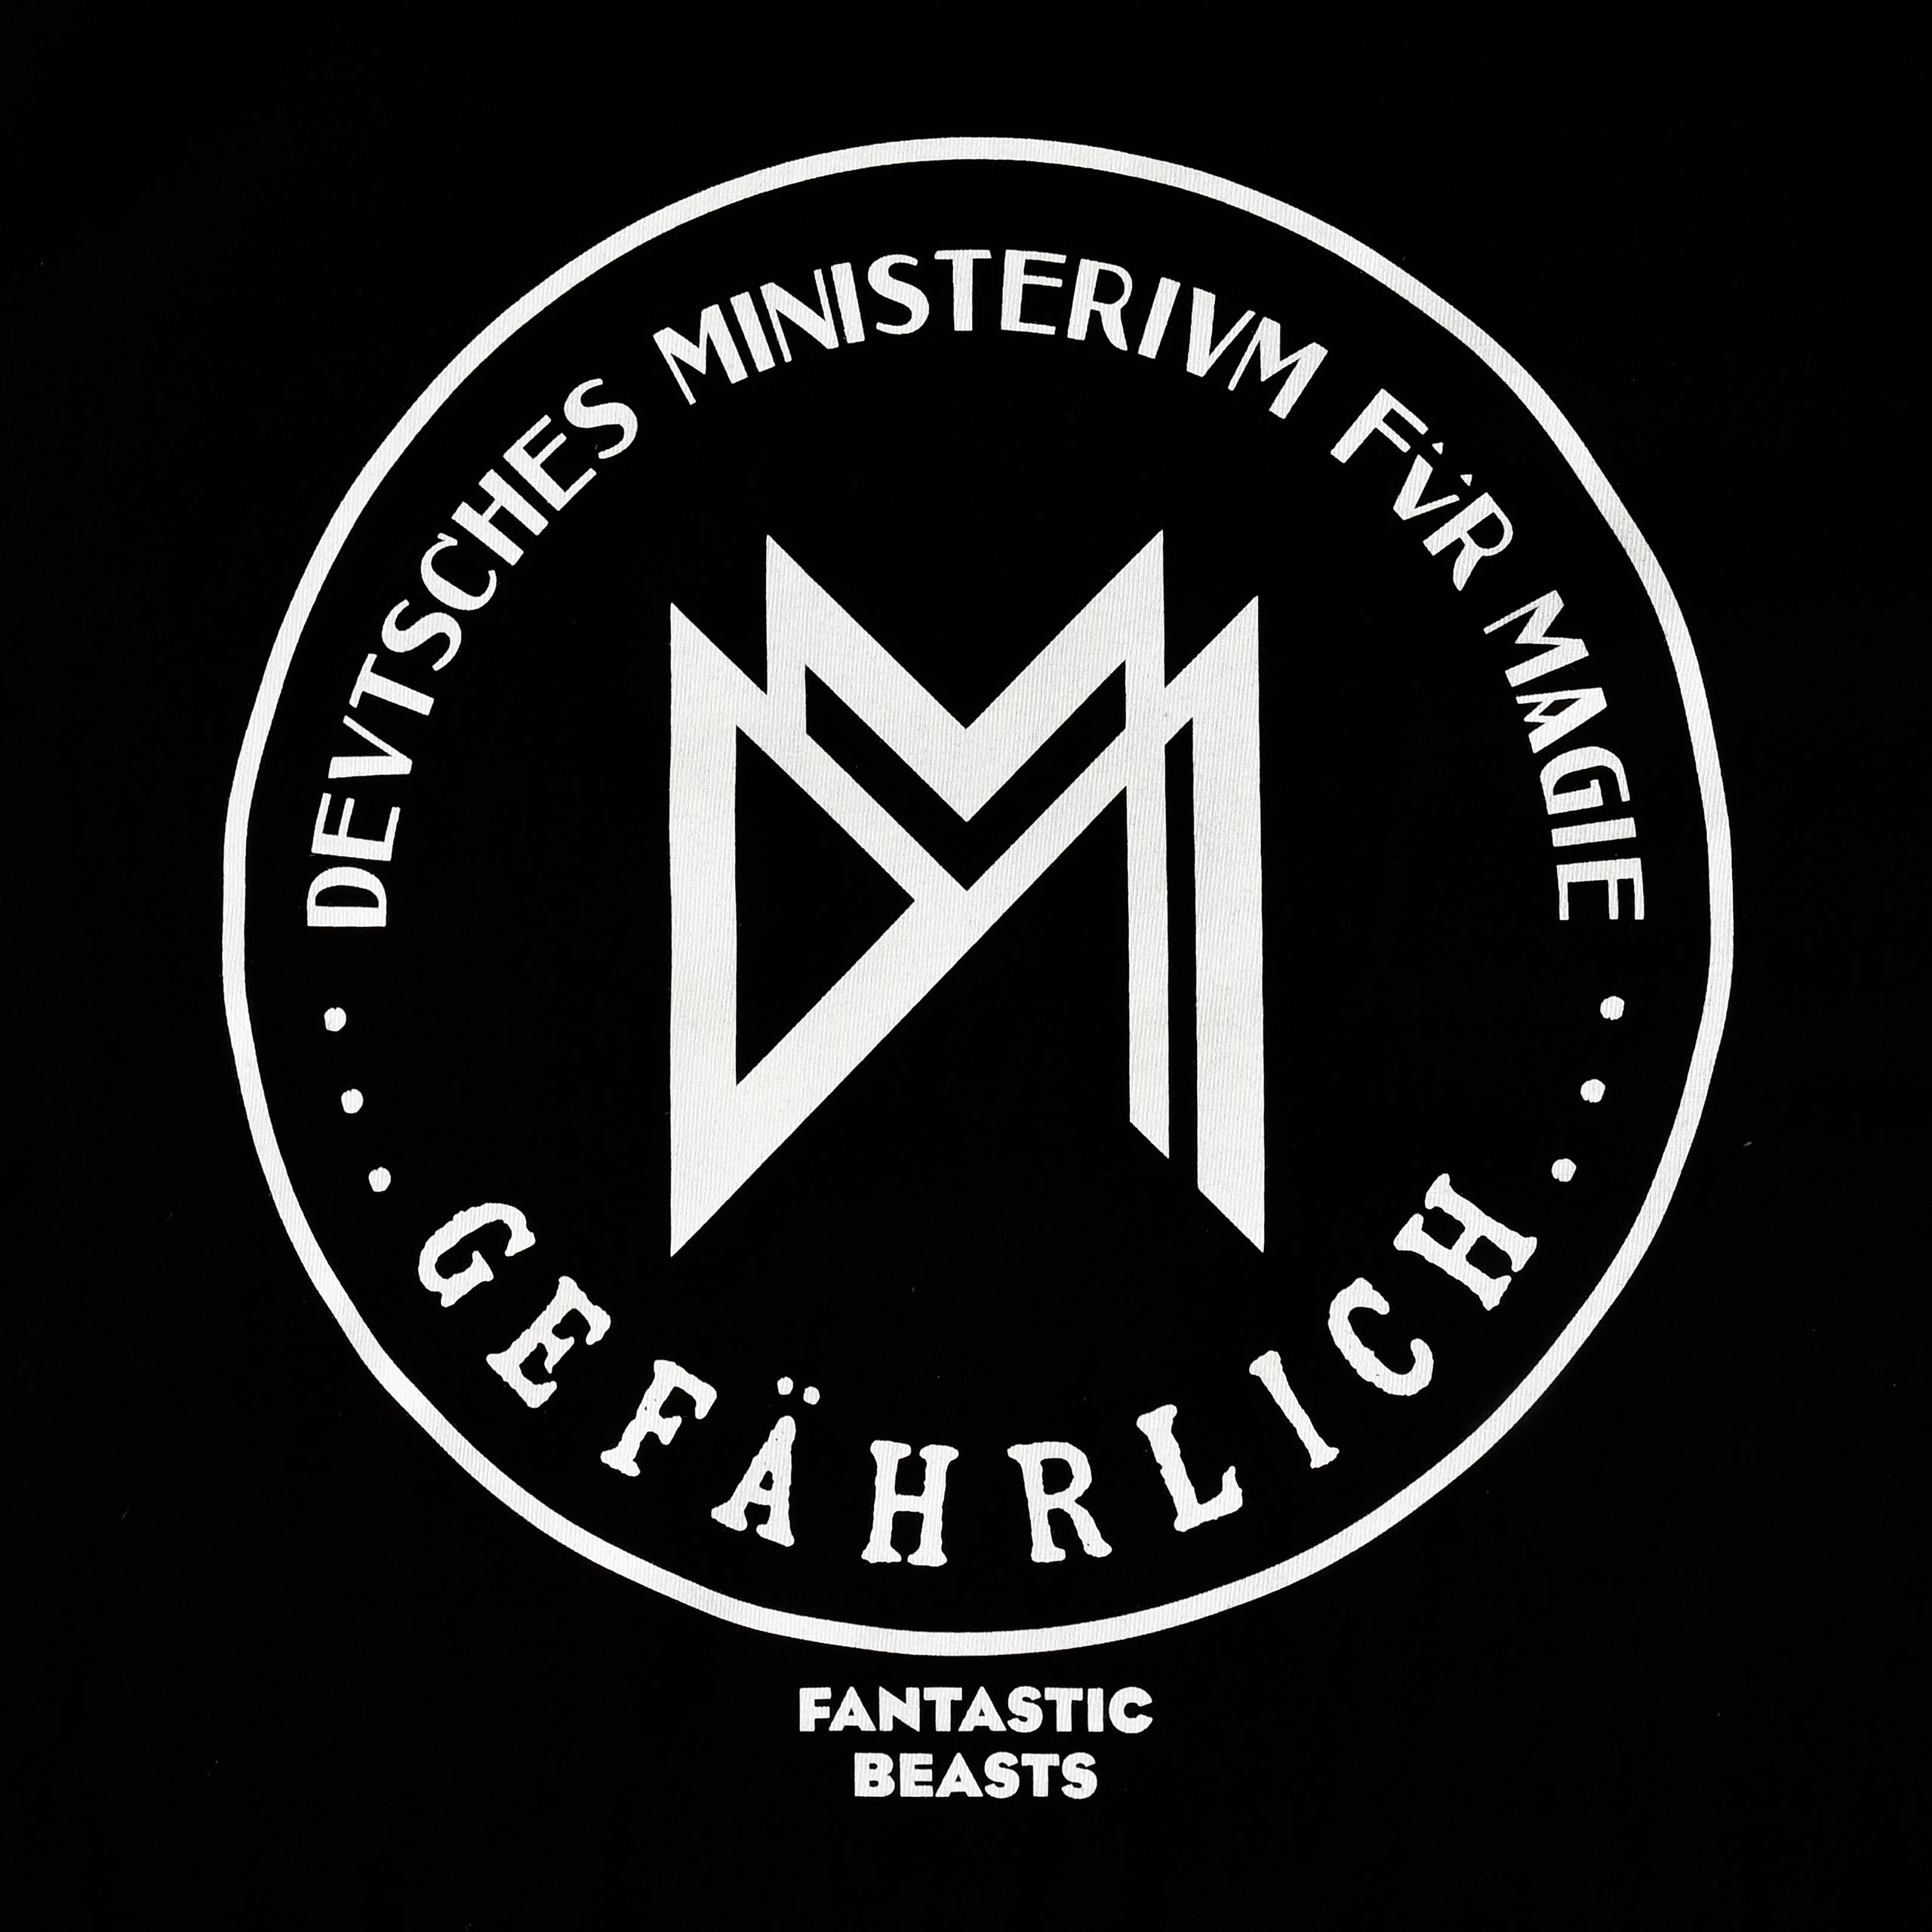 German Ministry of Magic T-Shirt black - Fantastic Beasts